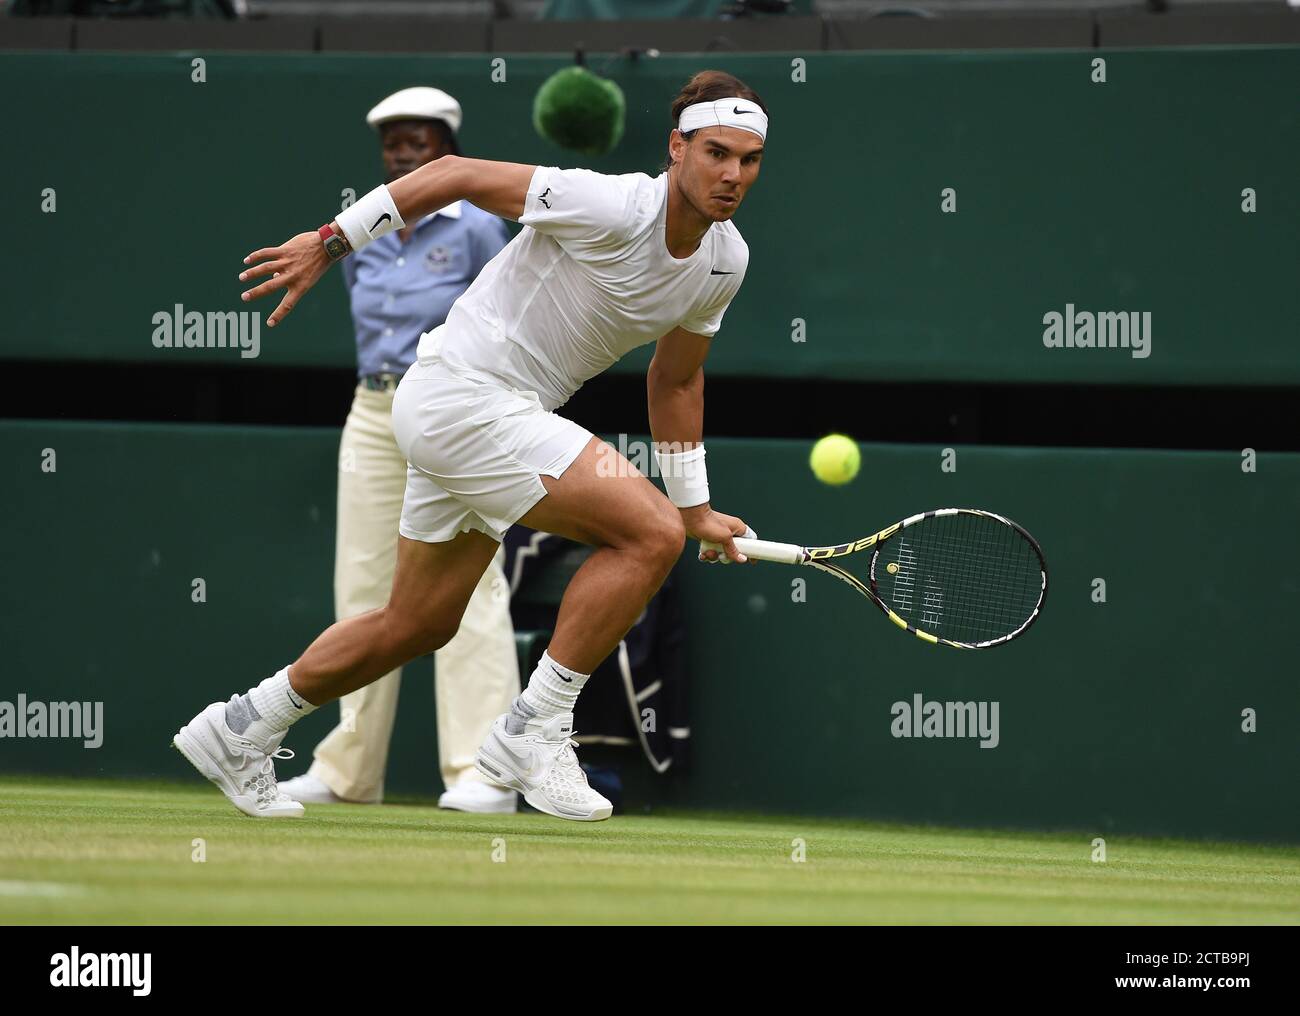 Mikhail Kukushkin contra Rafael Nadal. CAMPEONATO DE TENIS DE WIMBLEDON 2014. Crédito de la imagen: © Mark Pain / Alamy Foto de stock